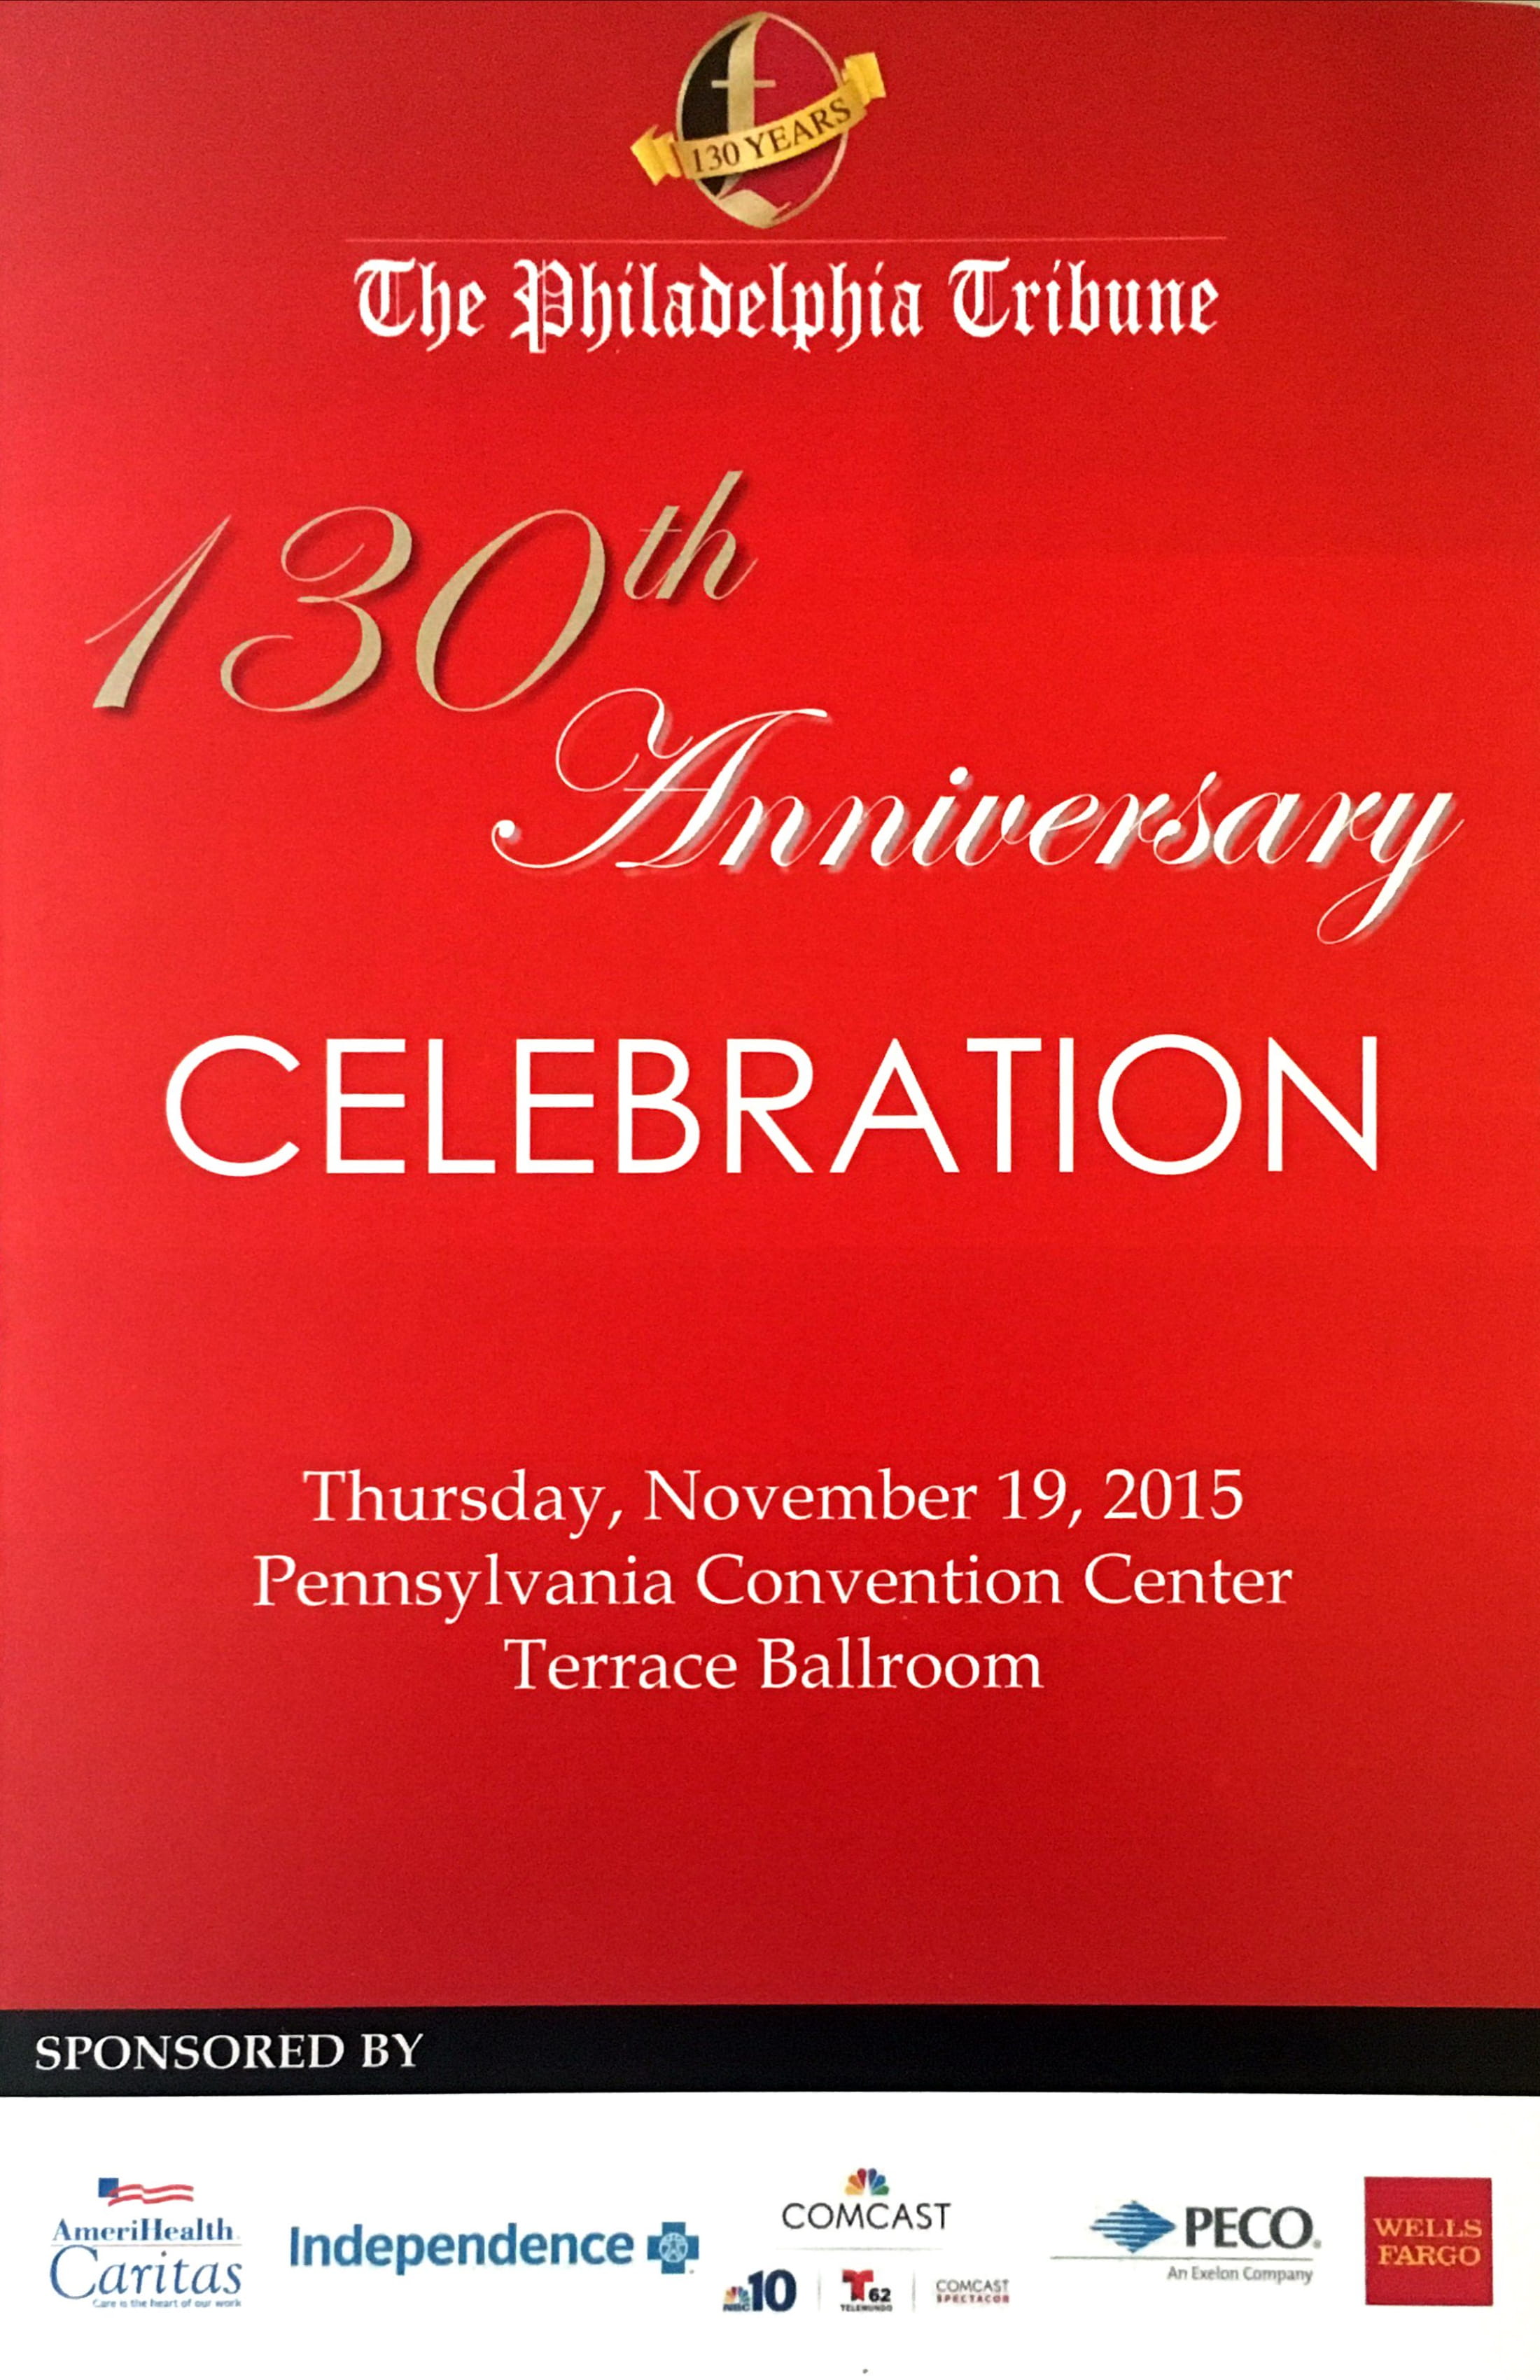 Tribune's 130th Anniversary Celebration